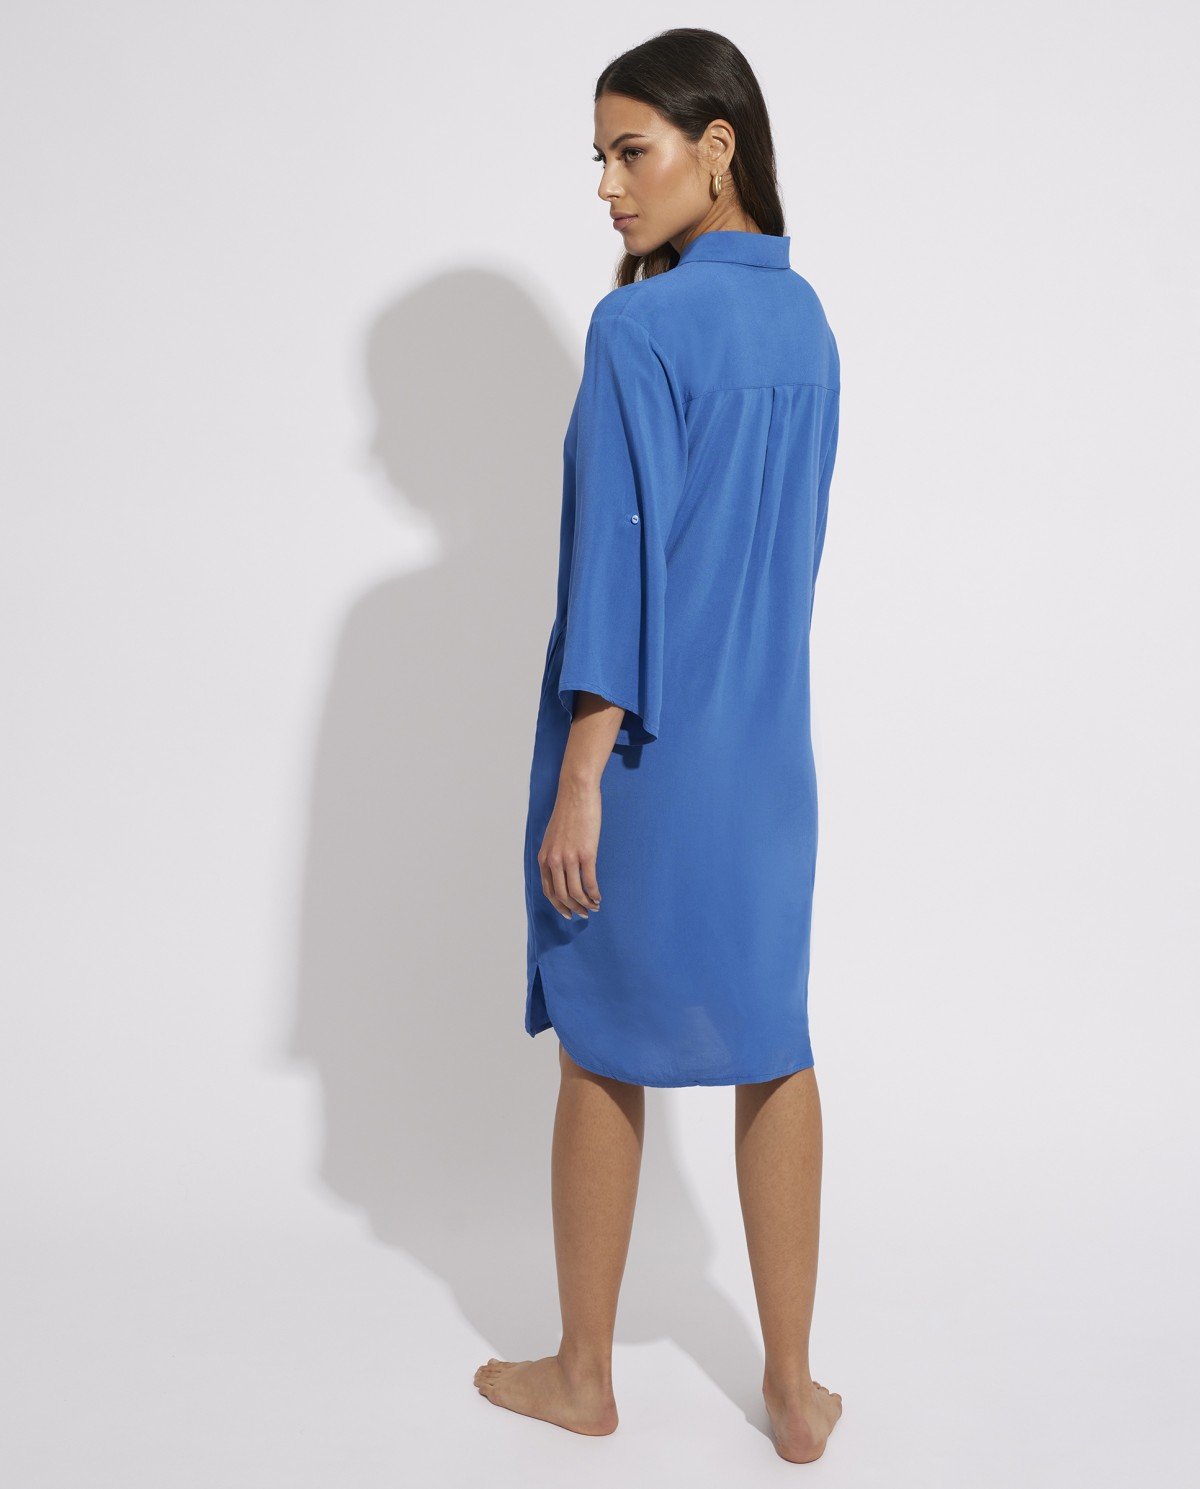 dress-bj595-c23-blue (1).jpg